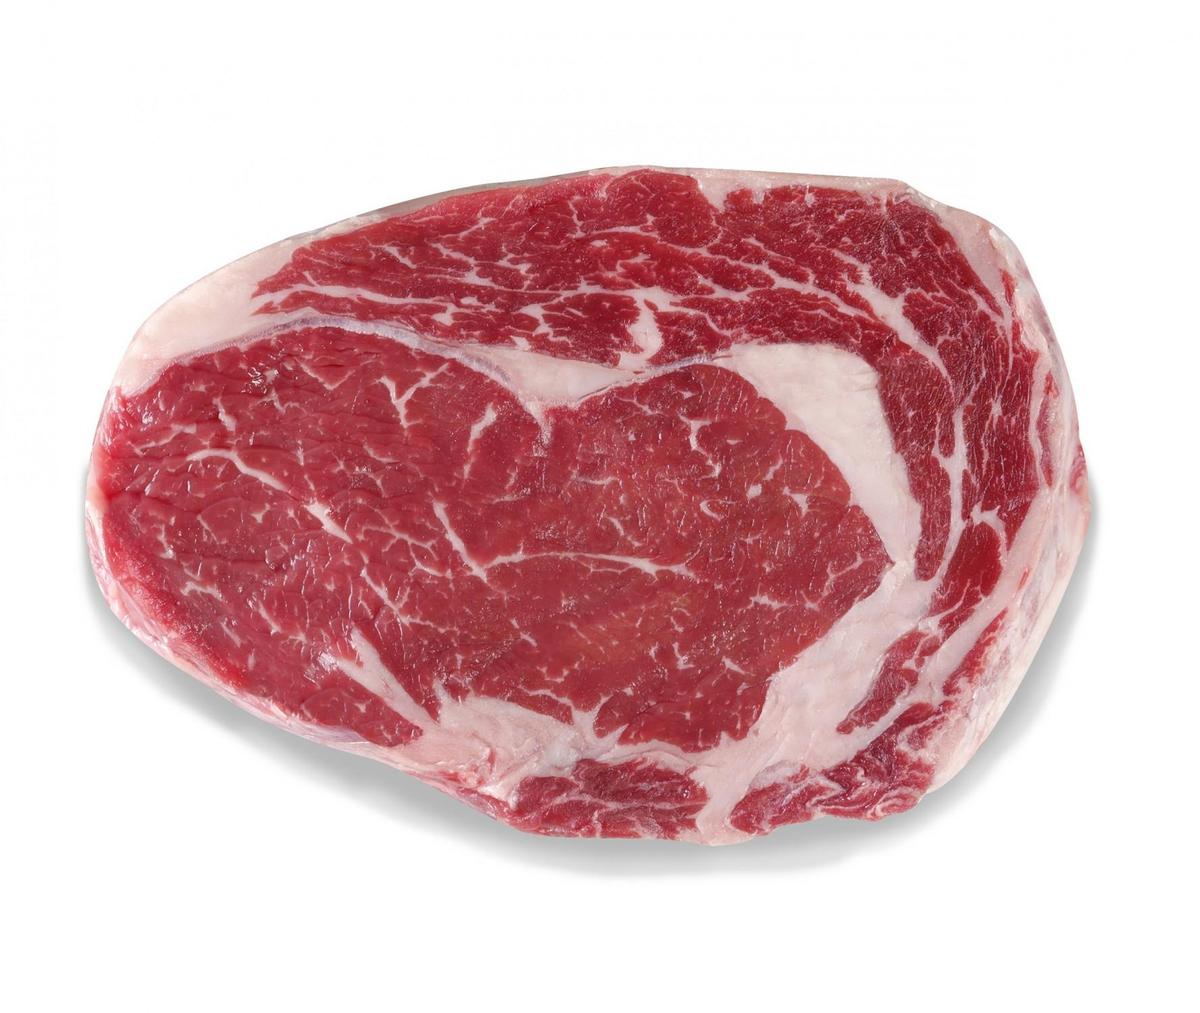 American-Beef-1777x1500